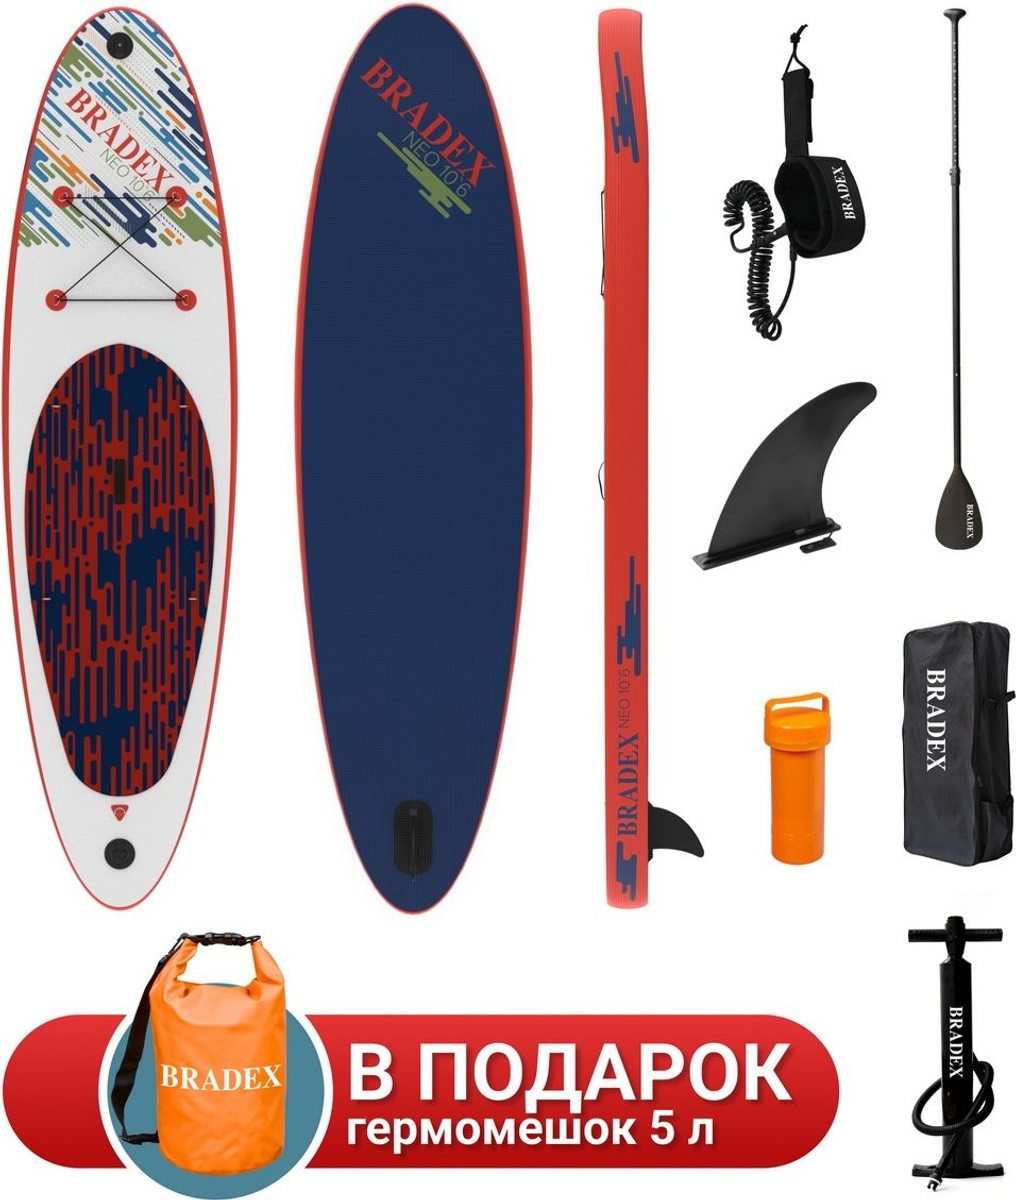 Bradex Neo 10’6 из каталога SUP досок в Санкт-Петербурге по цене 25990 ₽